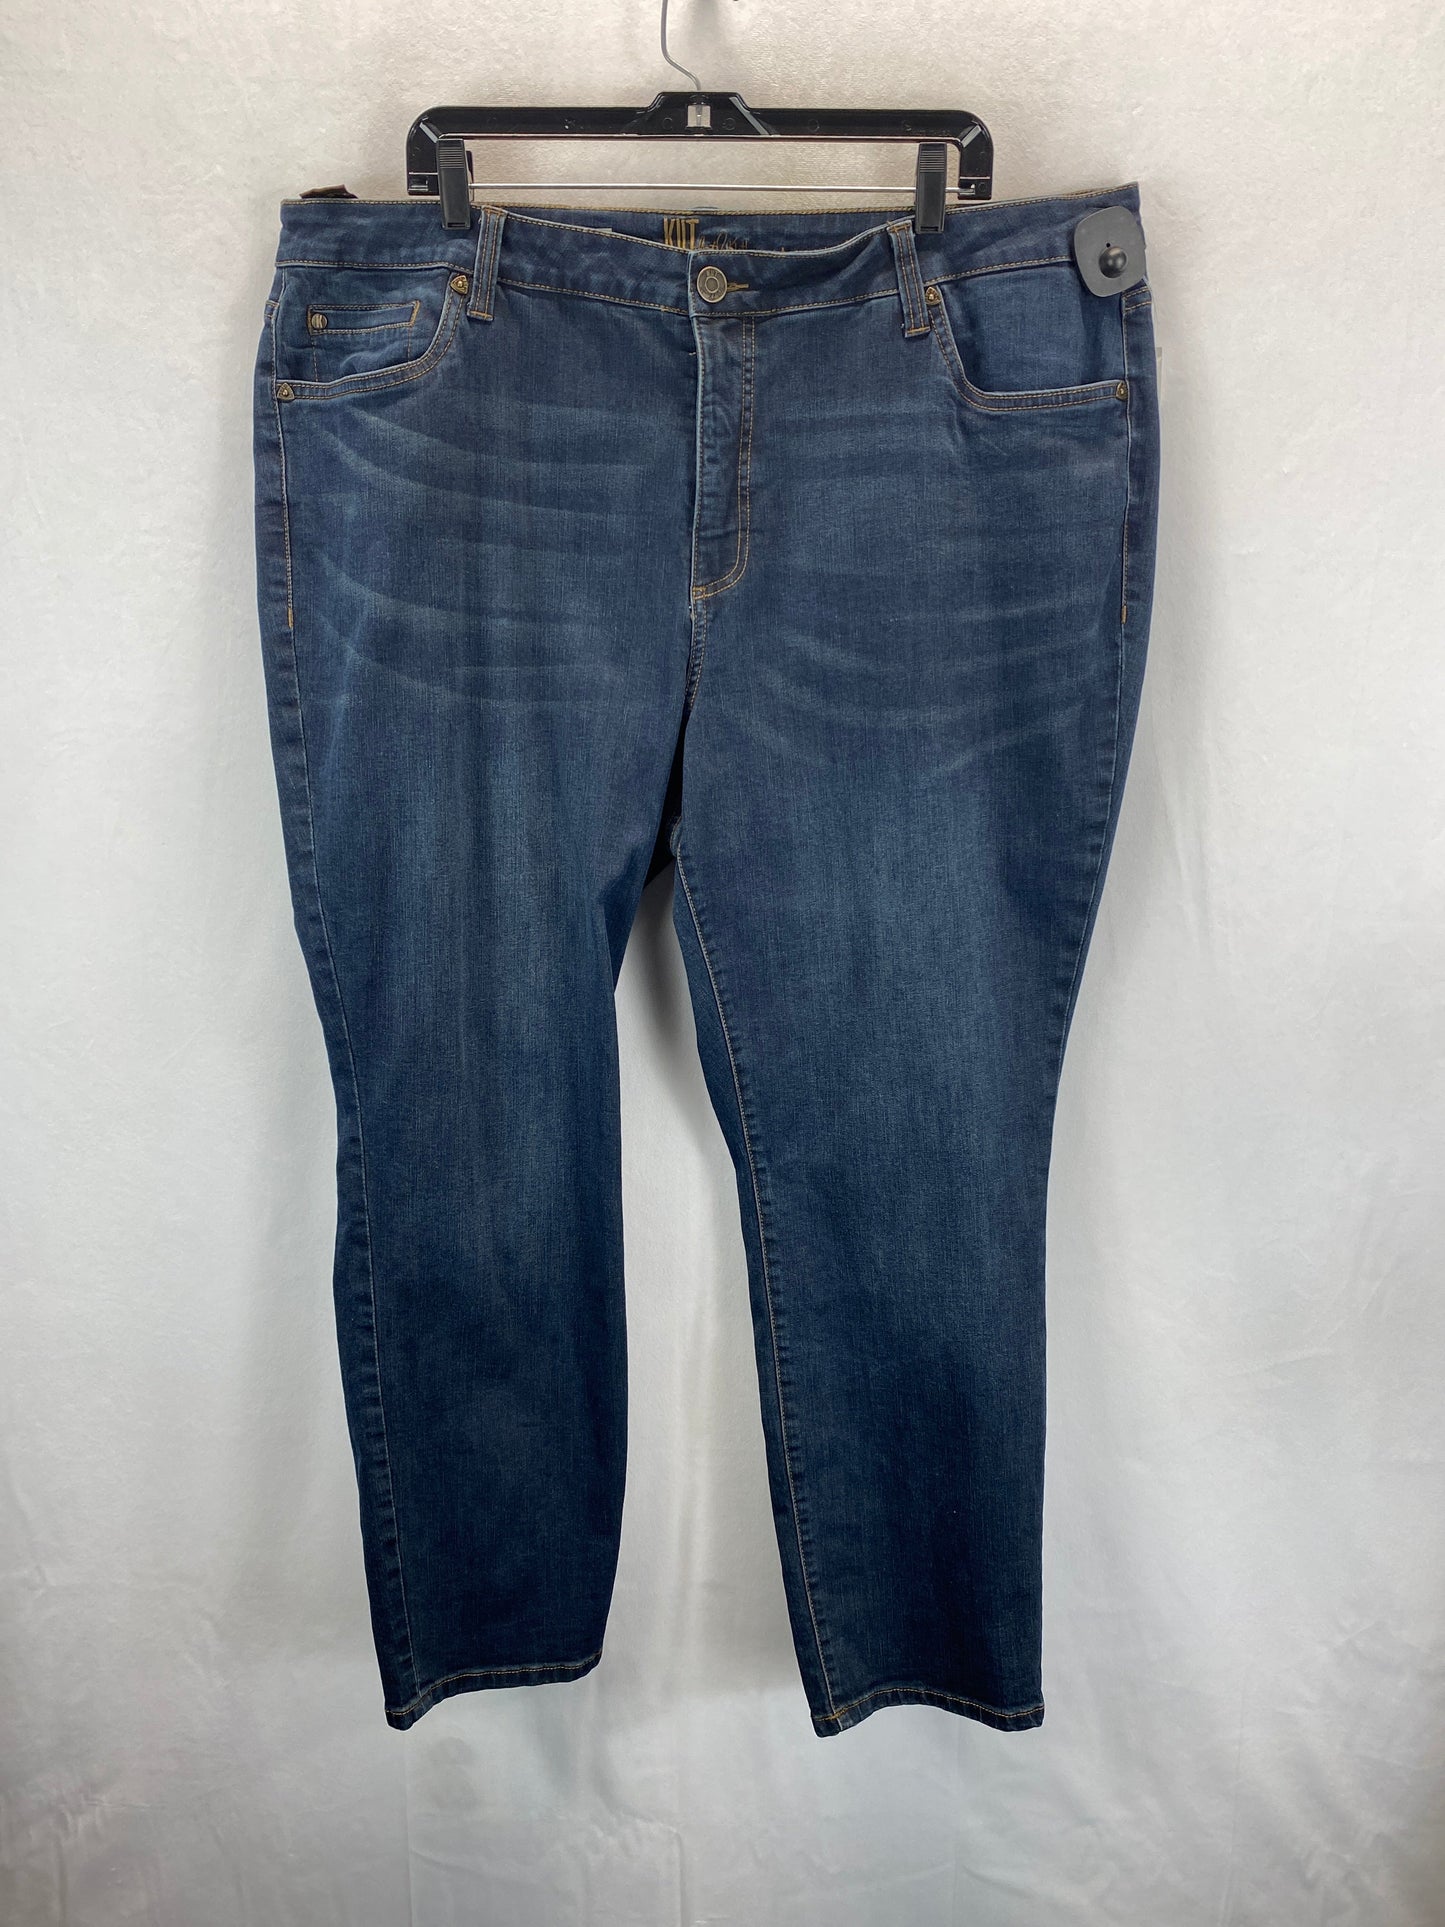 Blue Denim Jeans Straight Kut, Size 20w